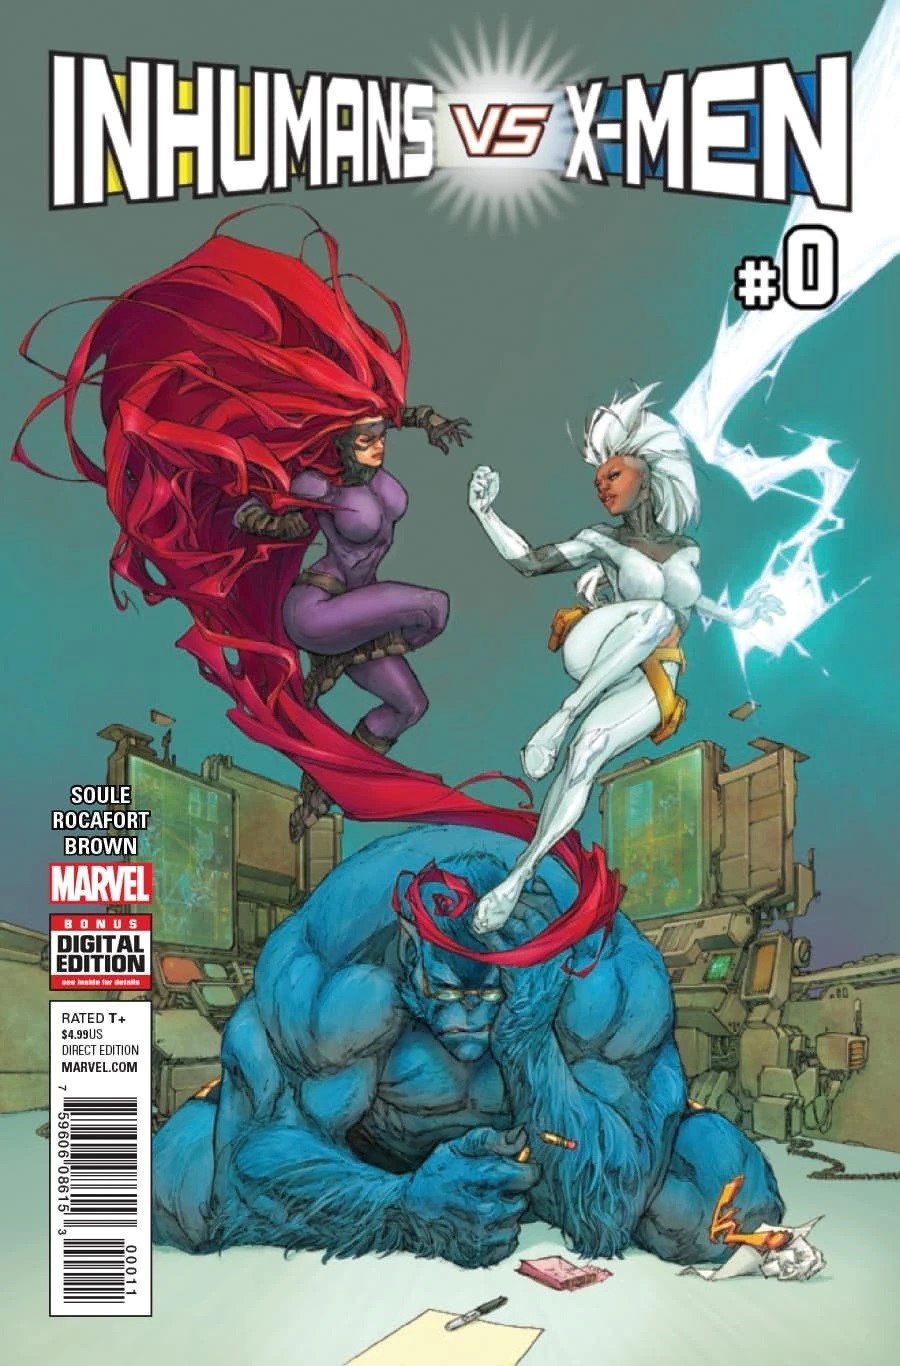 Ivx (Inhumans Vs. X-Men) Limited Series Bundle Issues 0-6 Various Covers